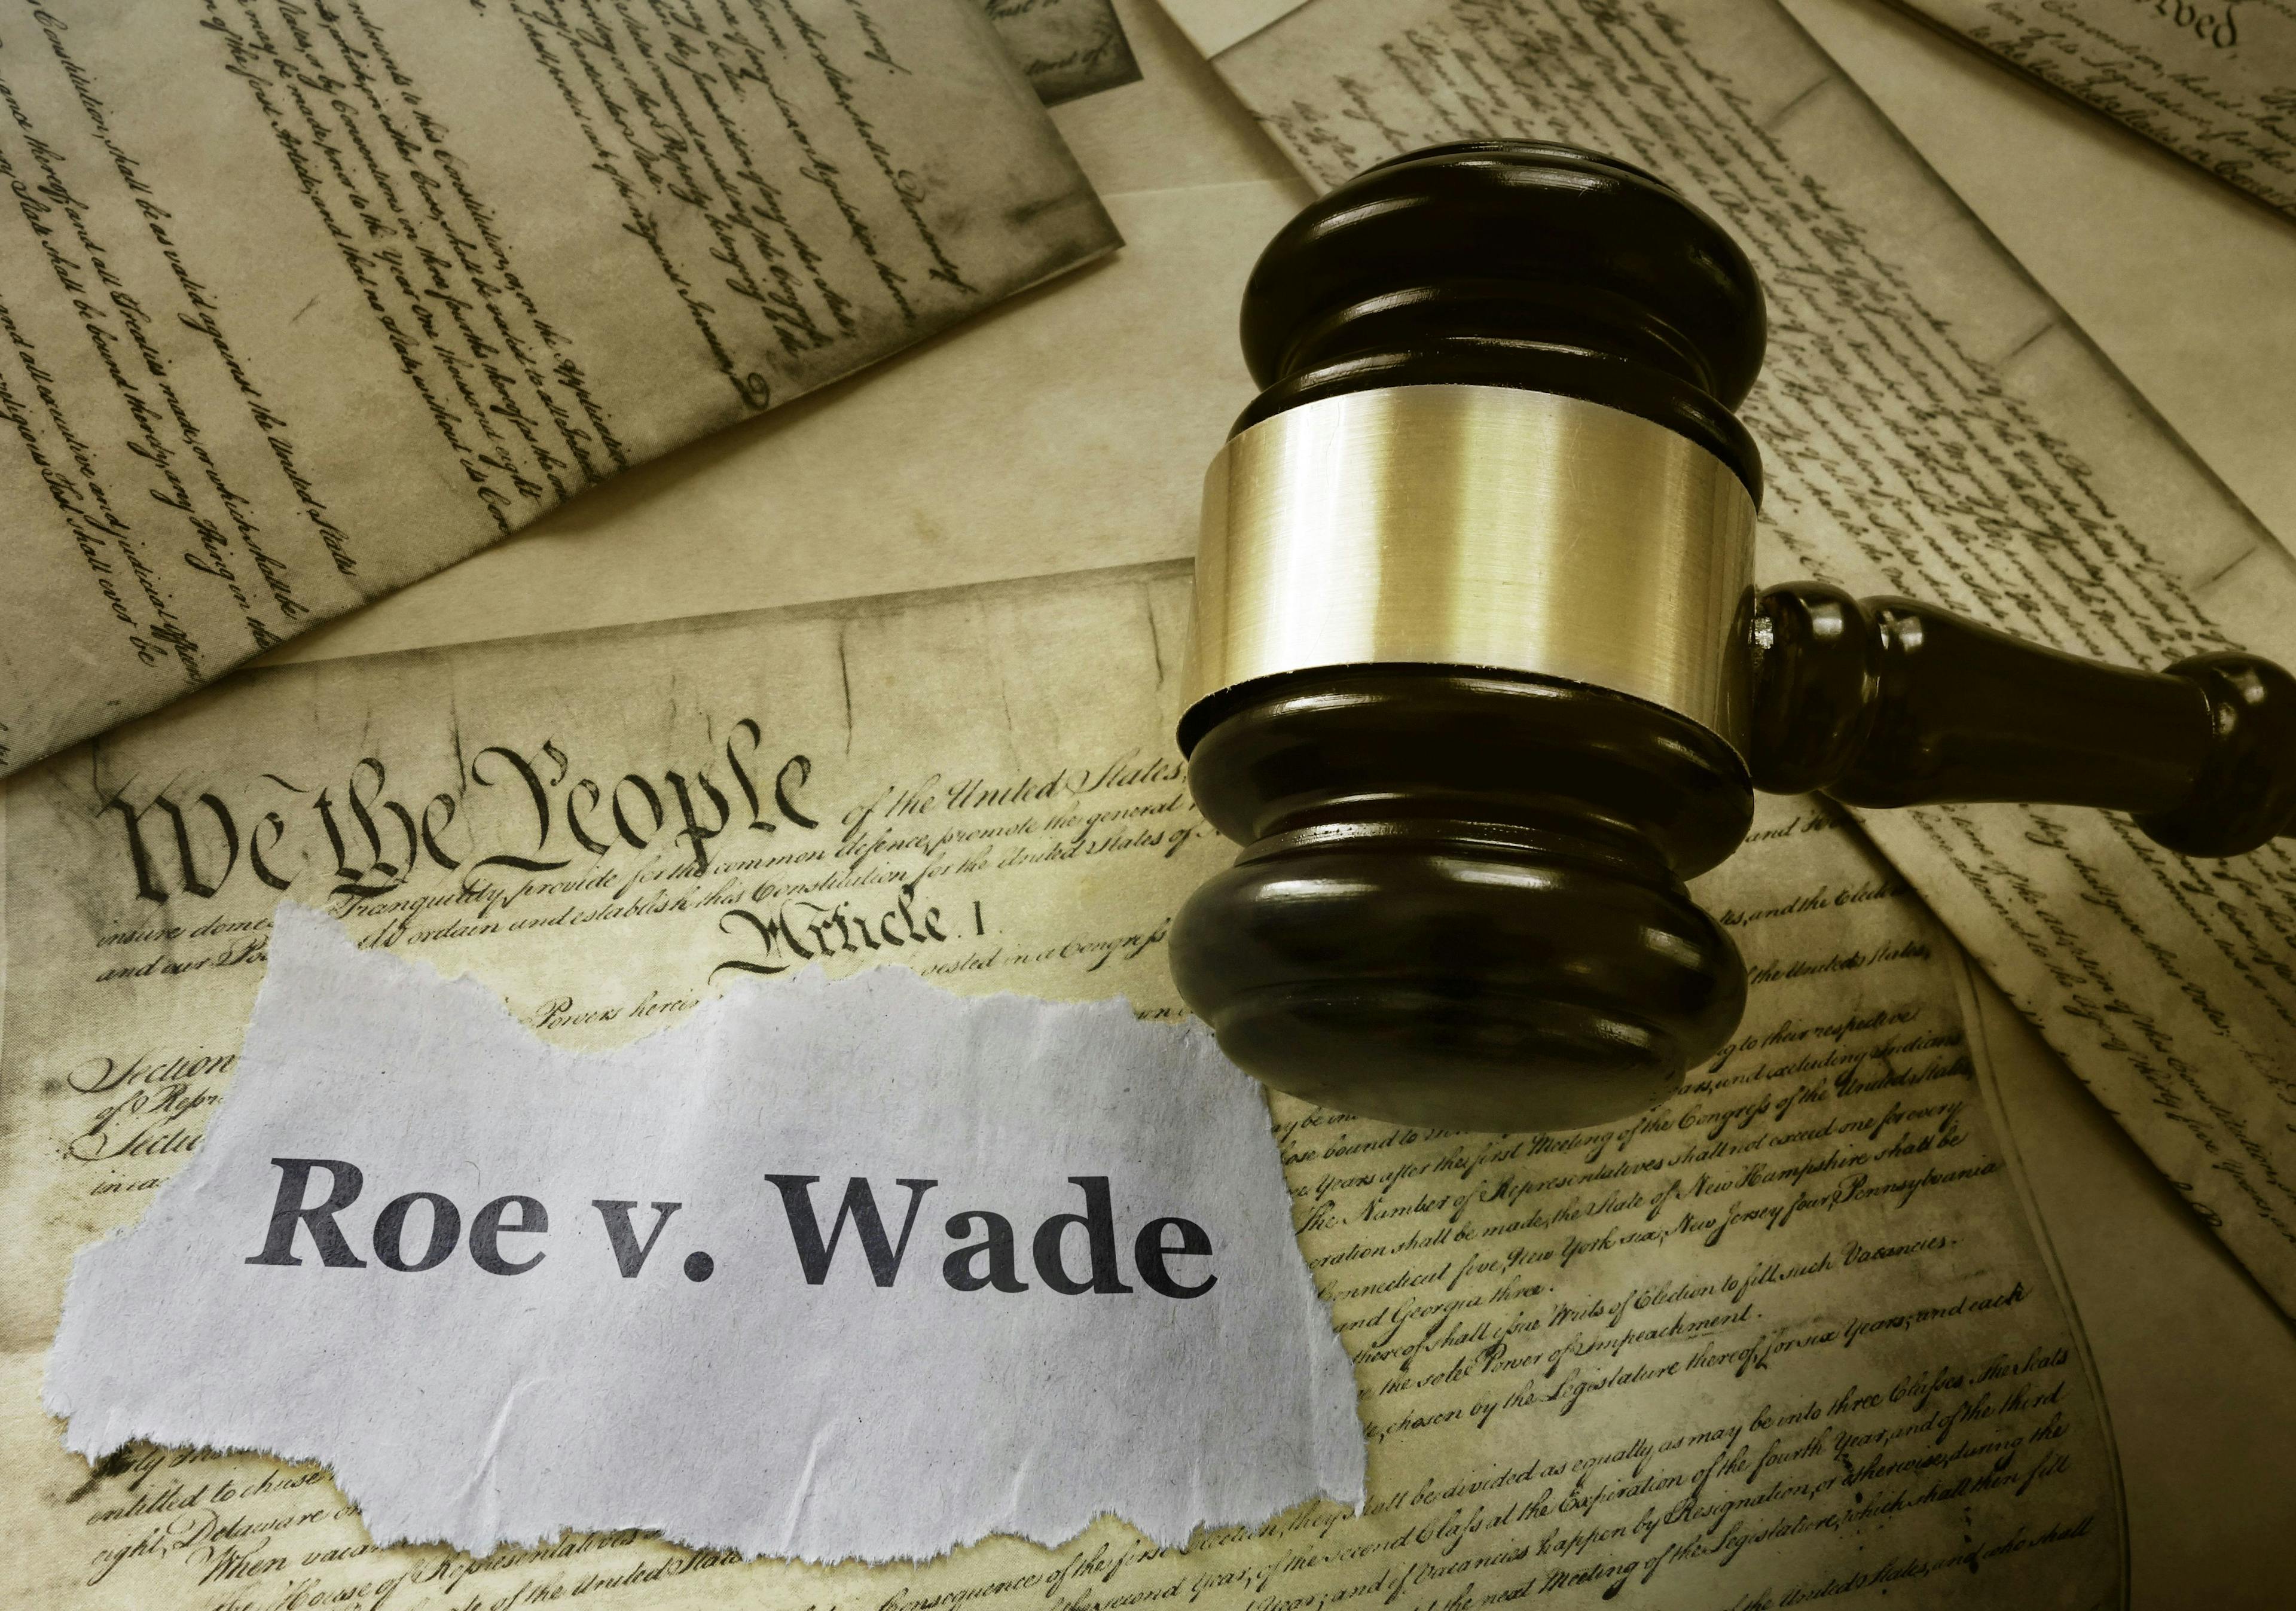 U.S. Supreme Court ready to overturn Roe v. Wade landmark abortion case